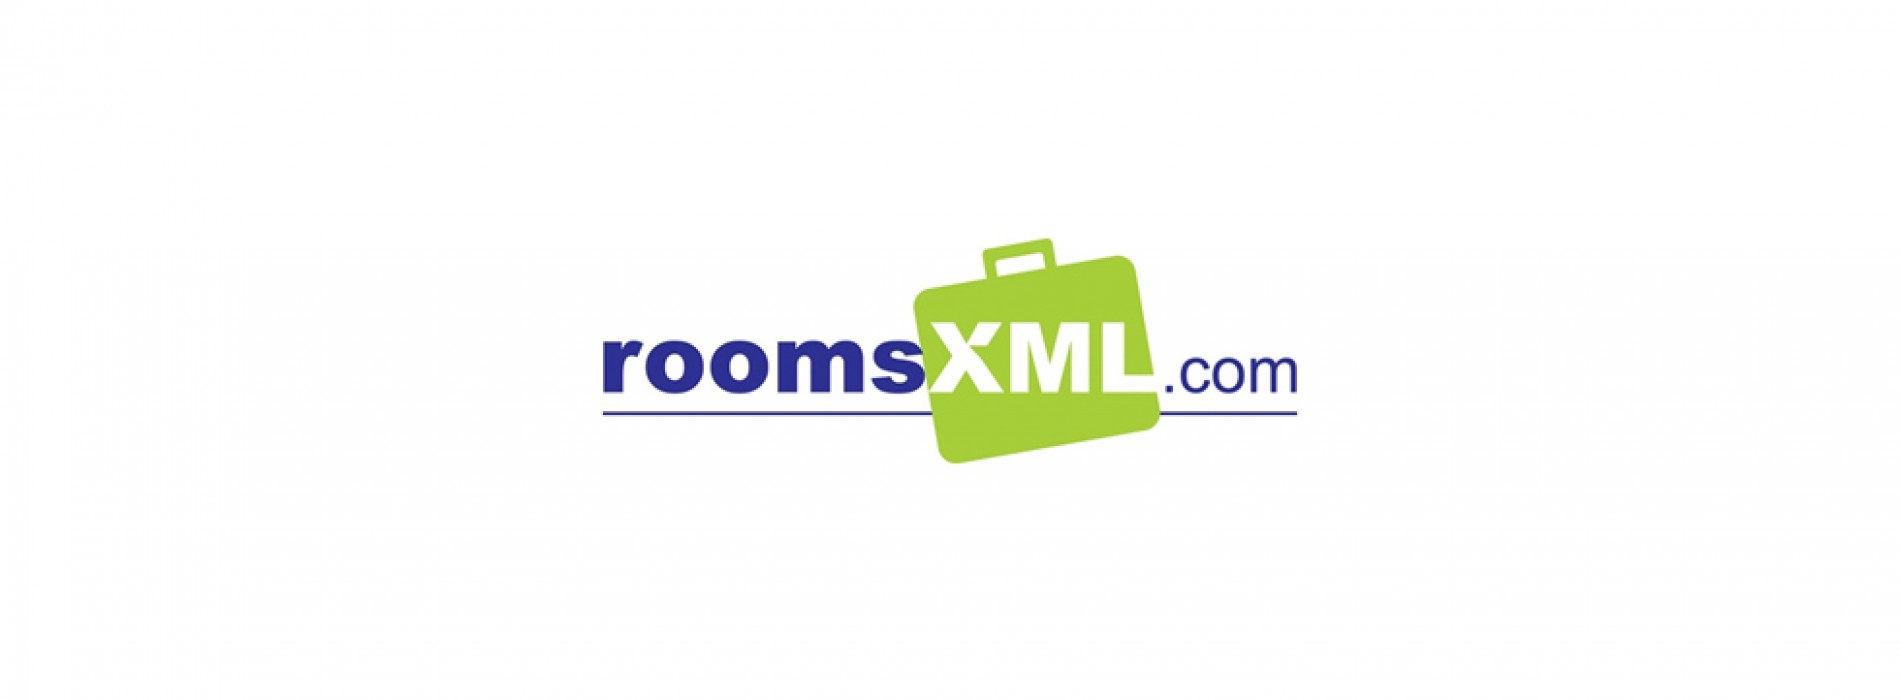 RateGain announces strategic alliance with roomsXML